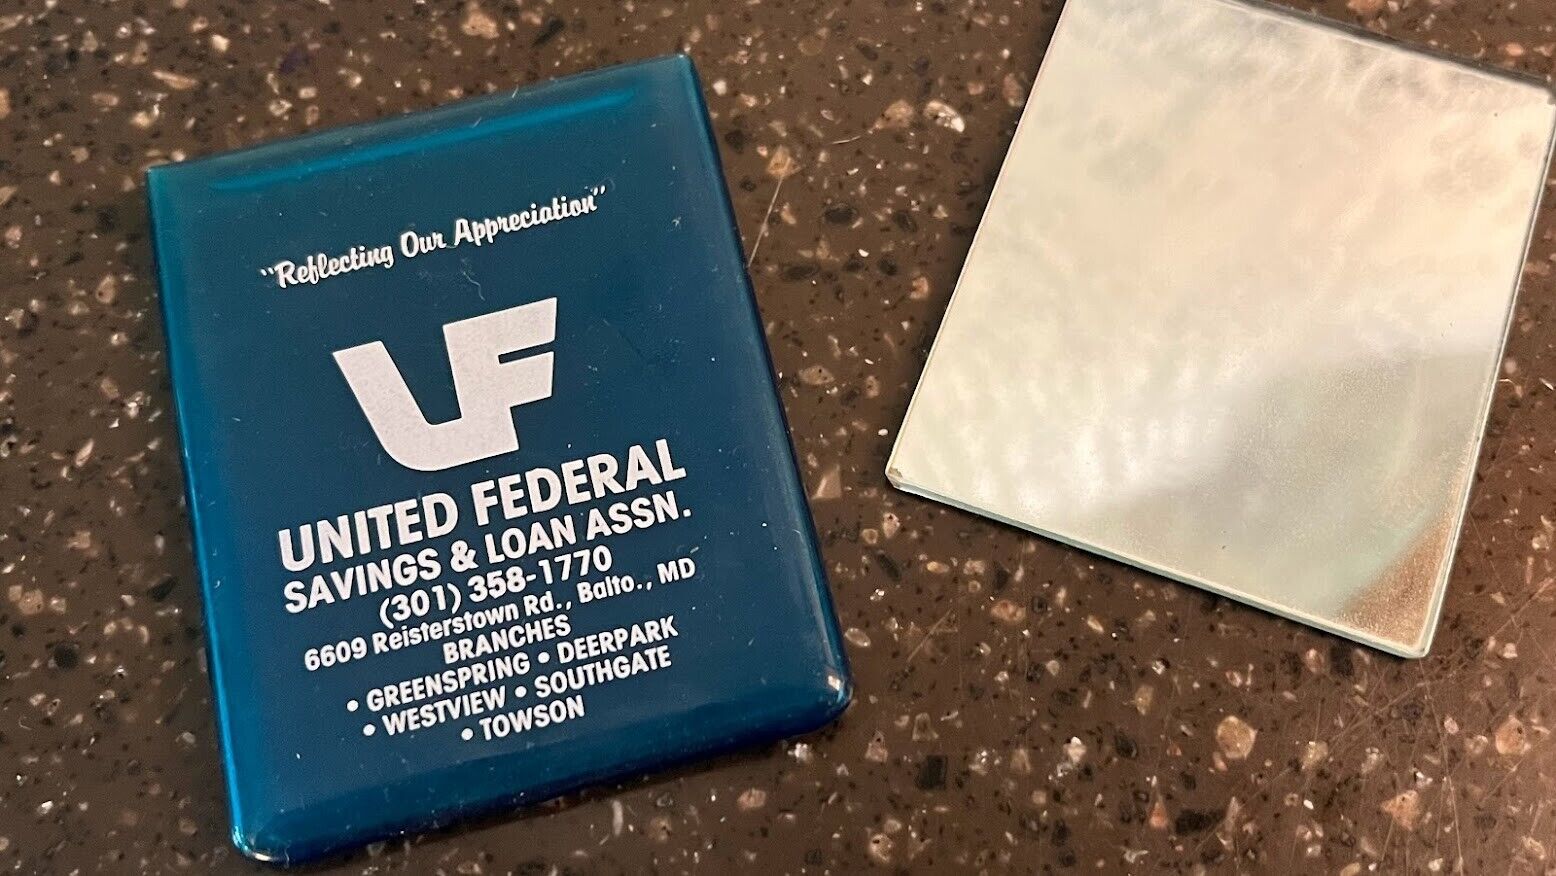 Vintage United Federal Savings and Loan Advertising Pocket Mirror promotional